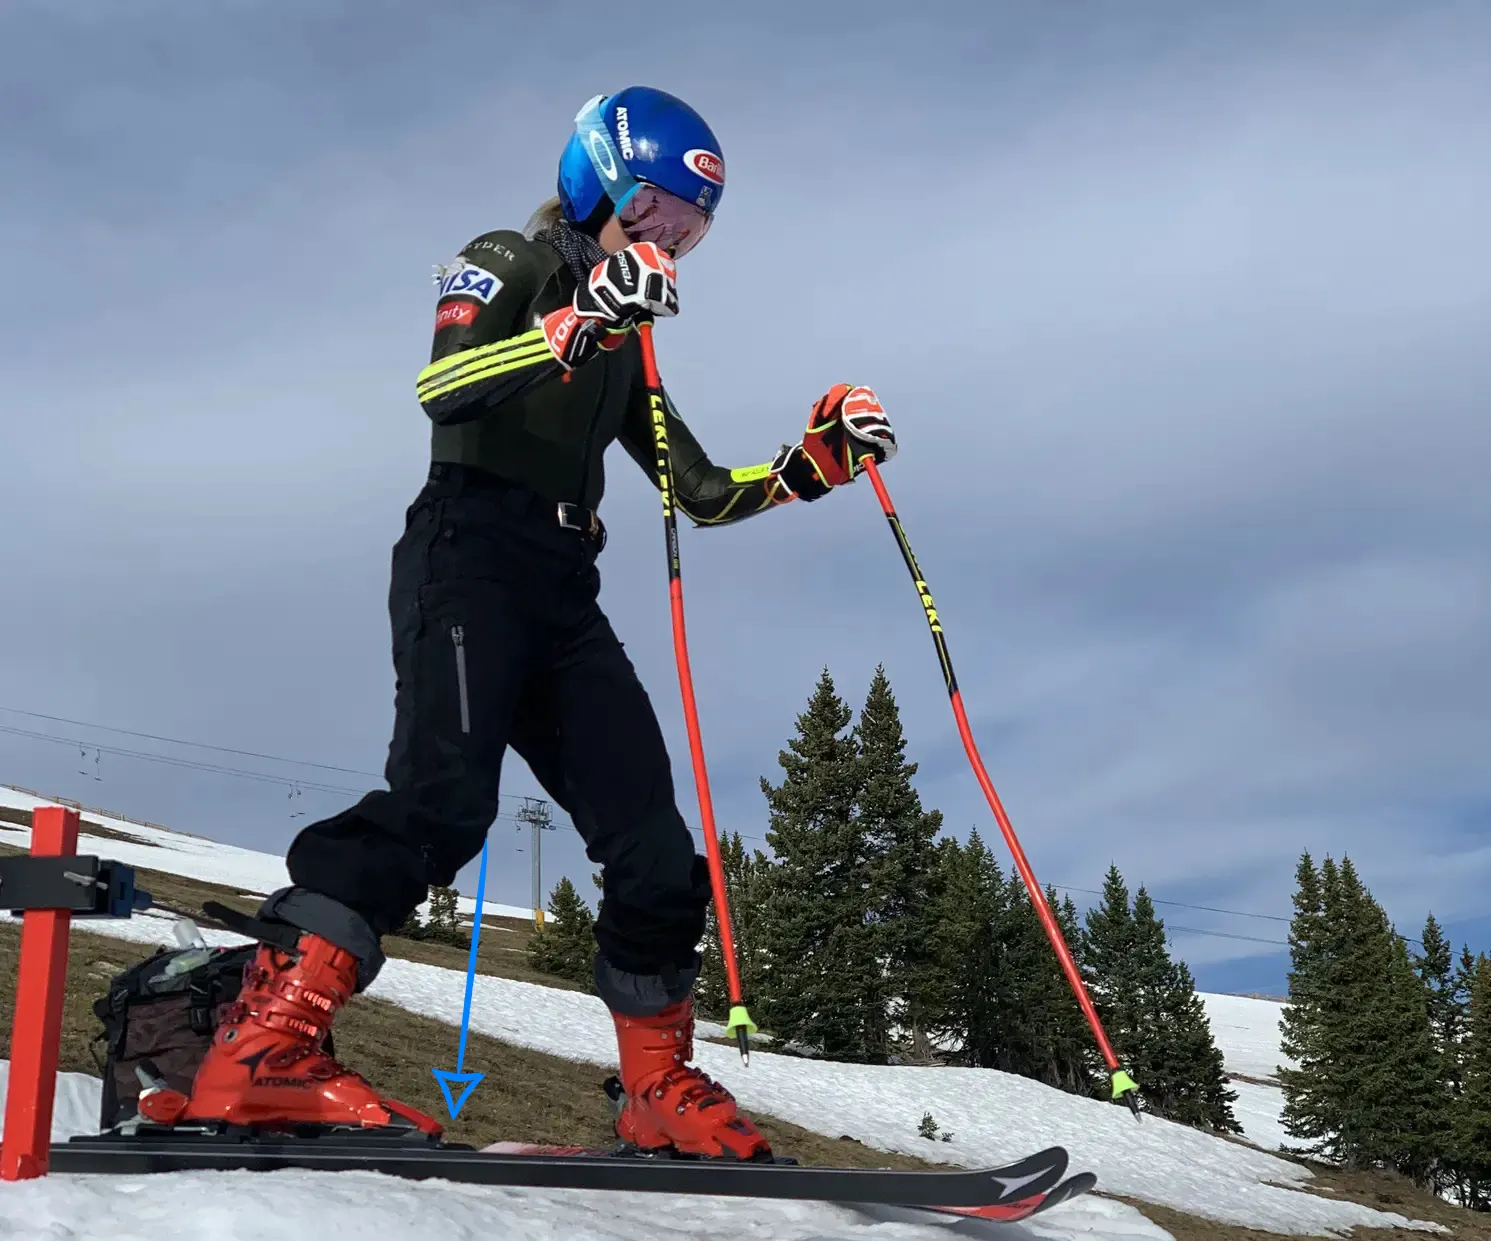 Mikaela Shiffrin training SL - ski boot's forward lean angle